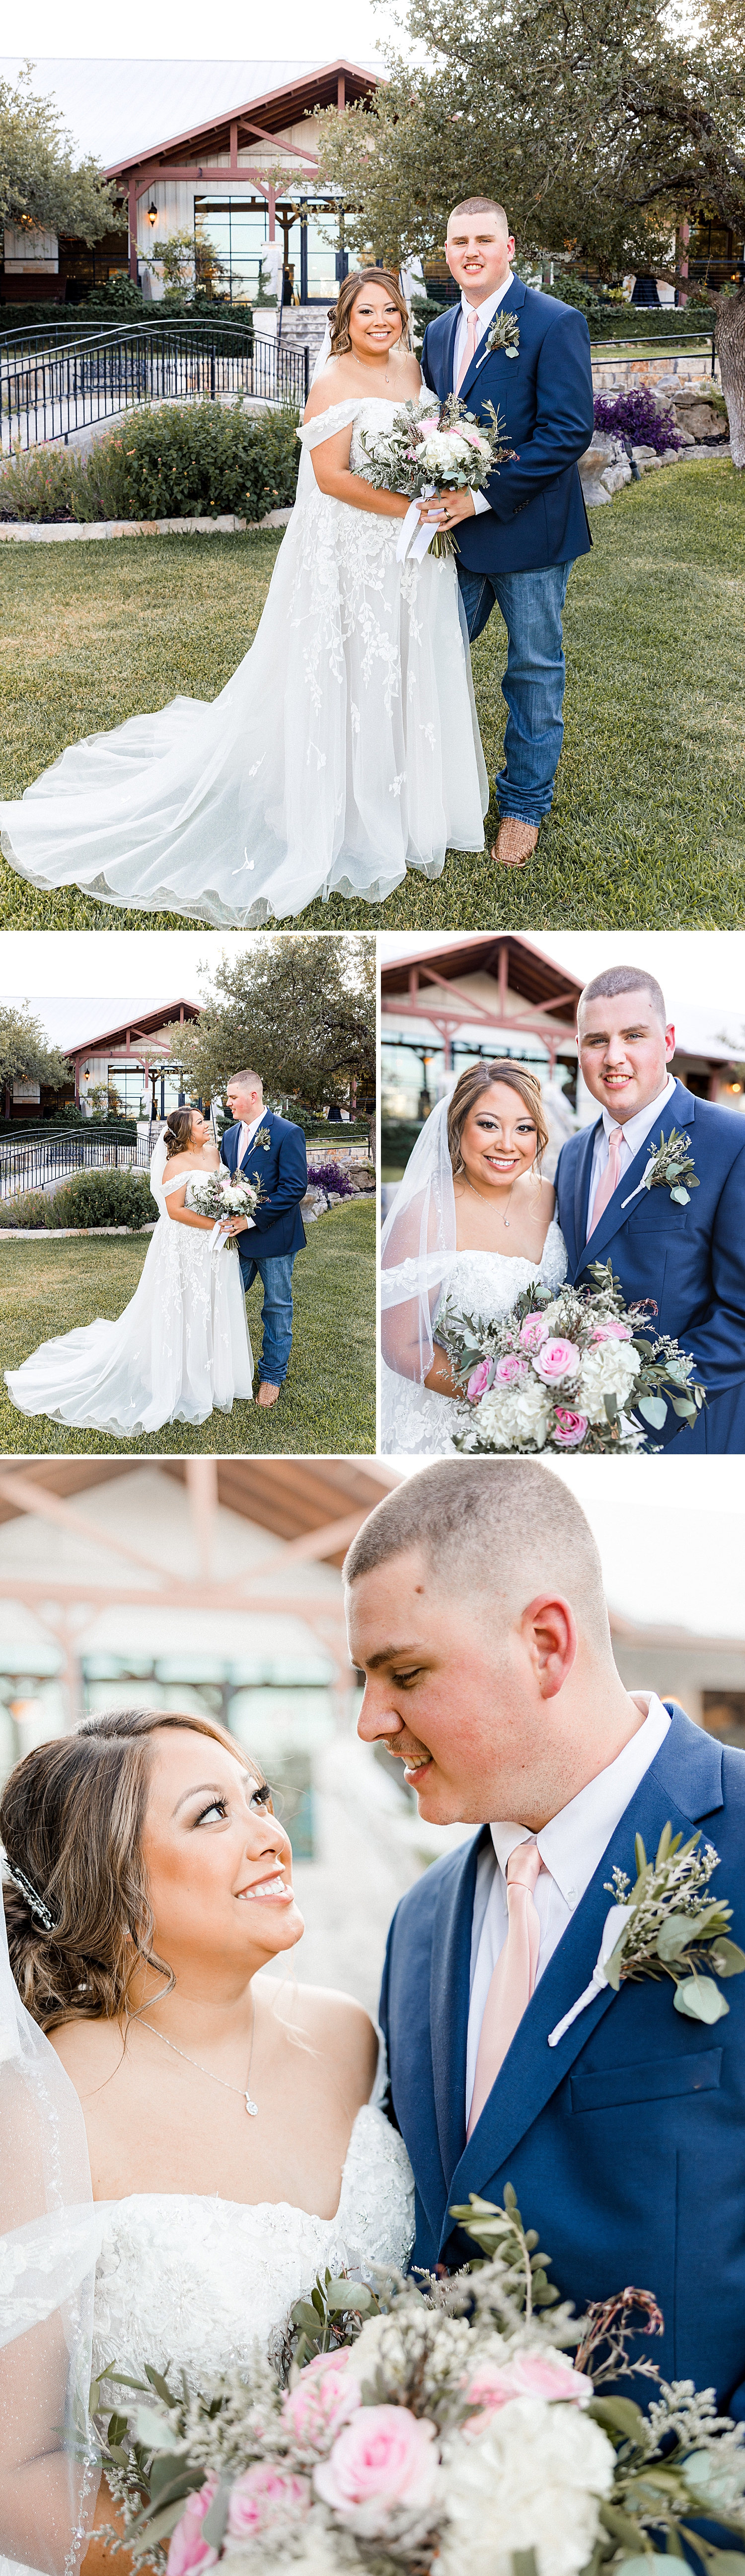 Milestone-Legacy-Hall-Wedding-New-Braunfels-Texas-Wedding-Navy-Blush-theme-Carly-Barton-Photography_0046.jpg